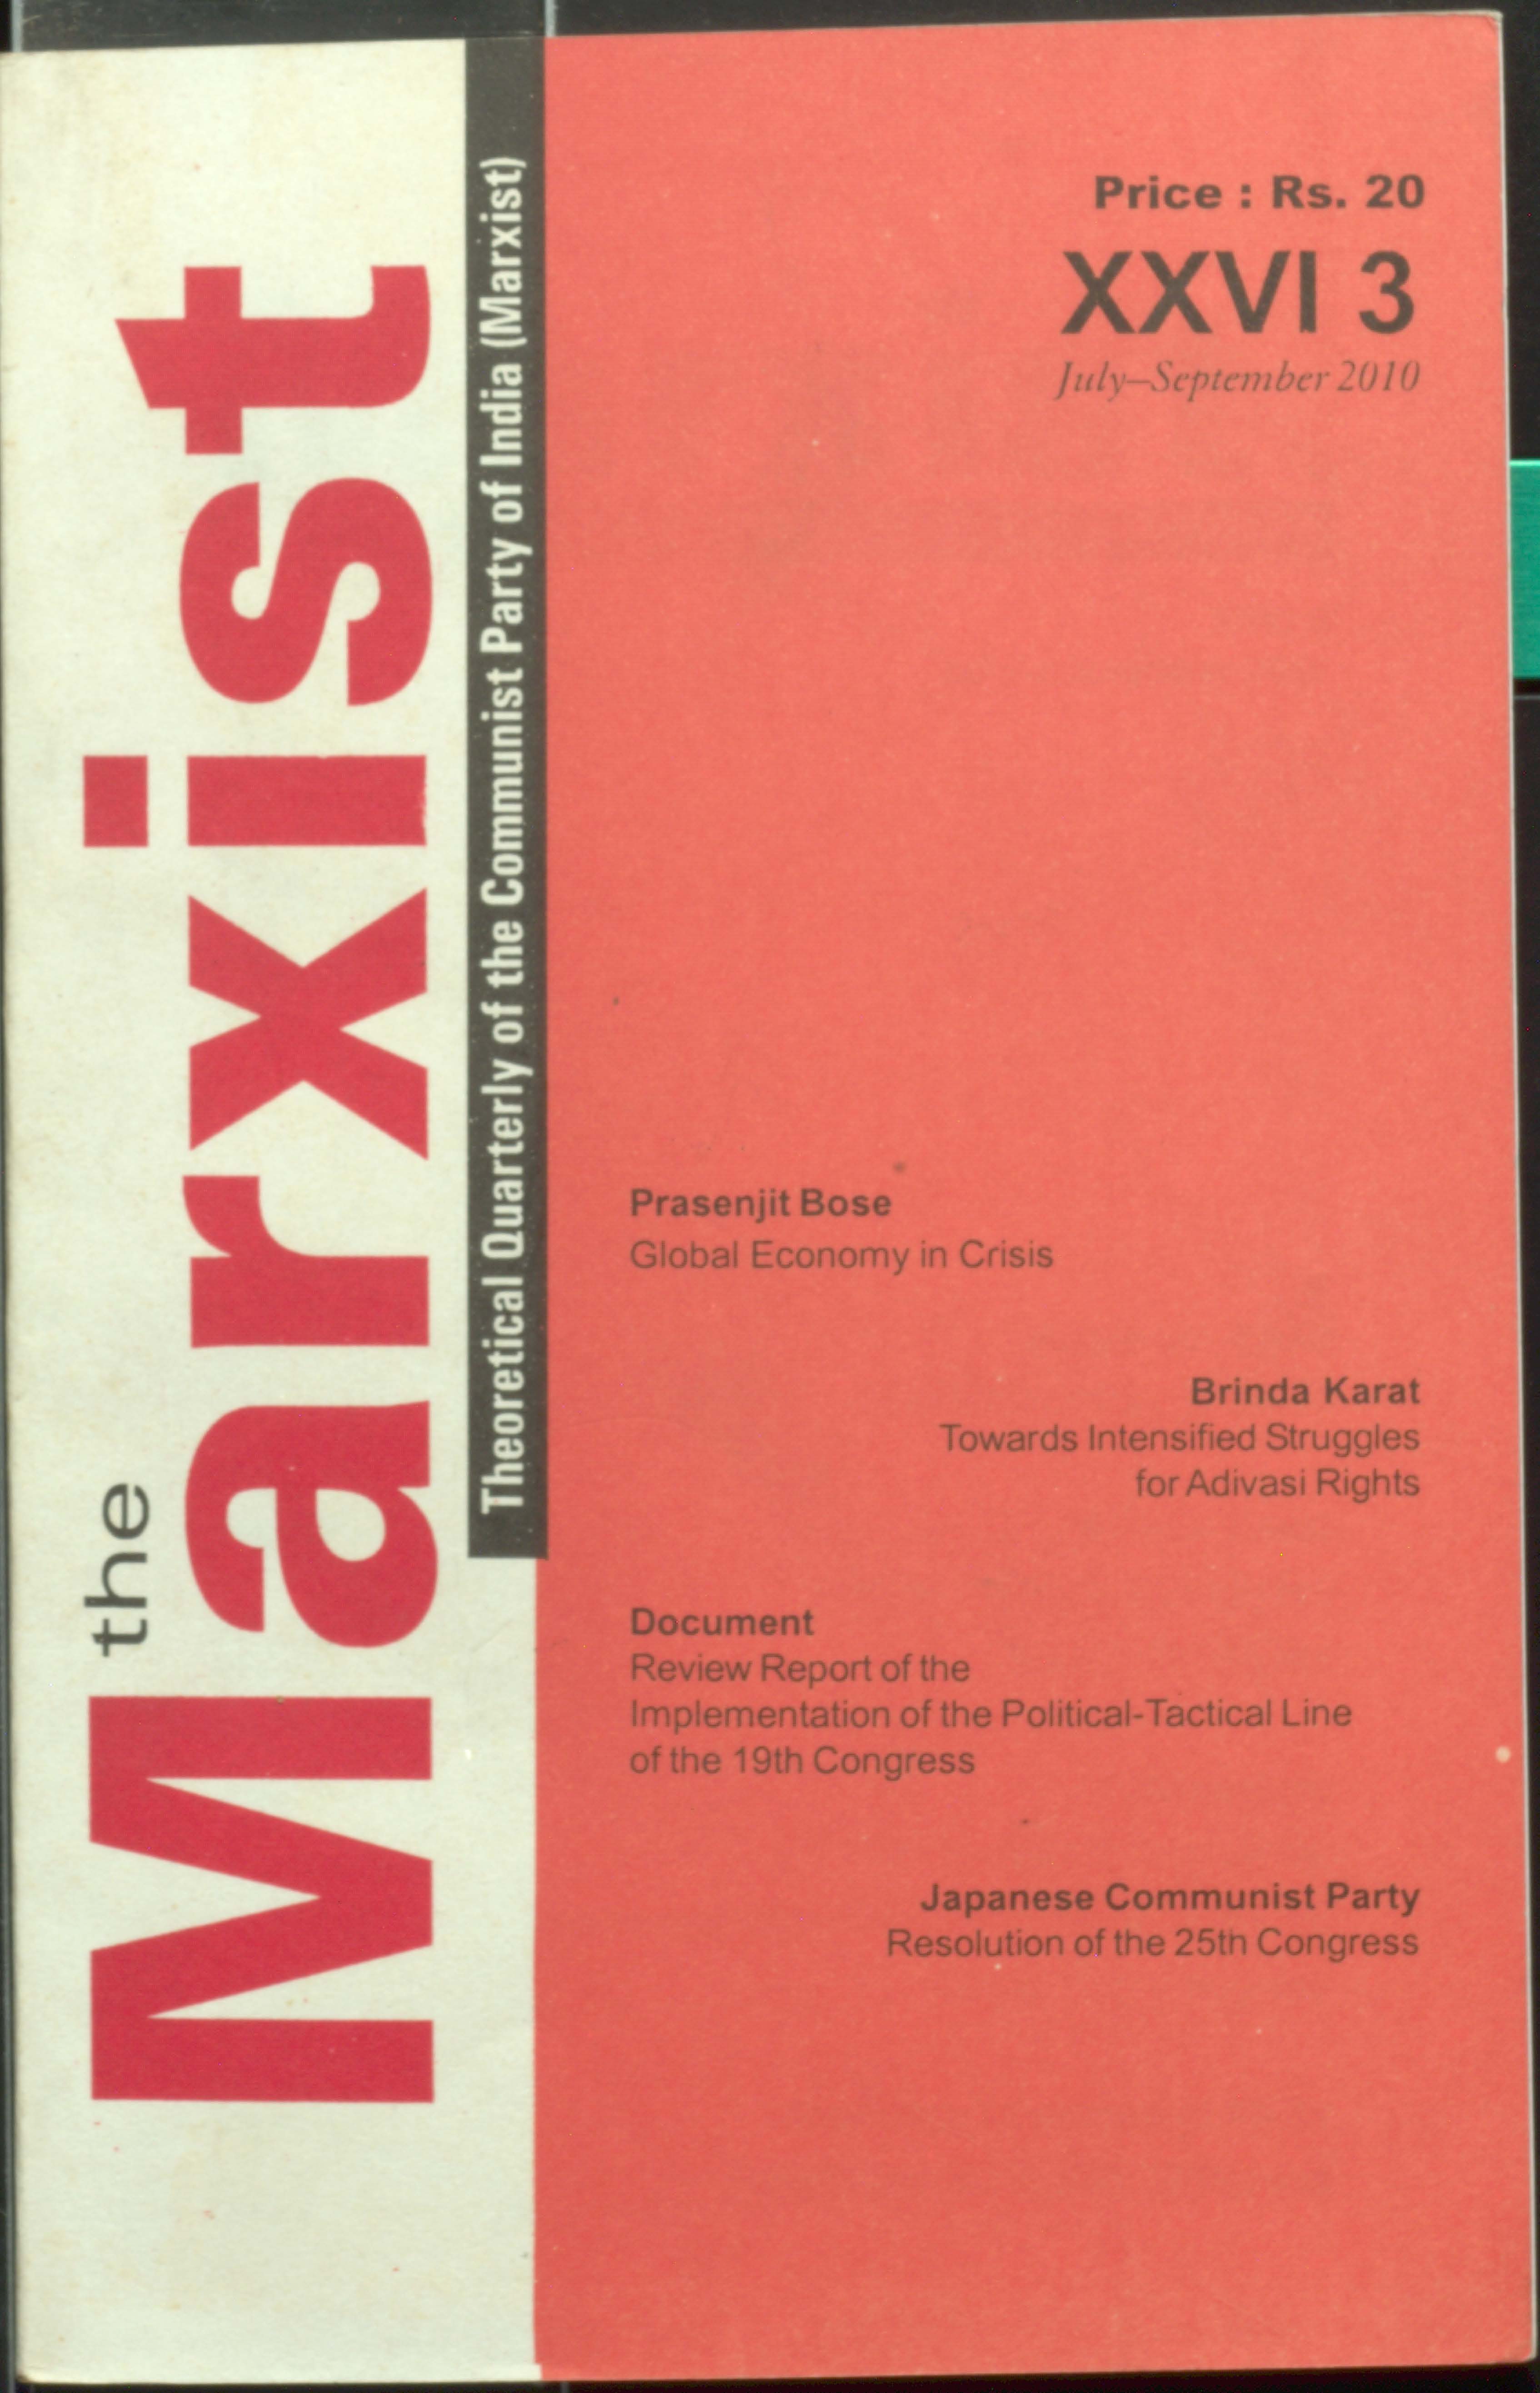 The Marxist (XXVI 3 July-september 2010)